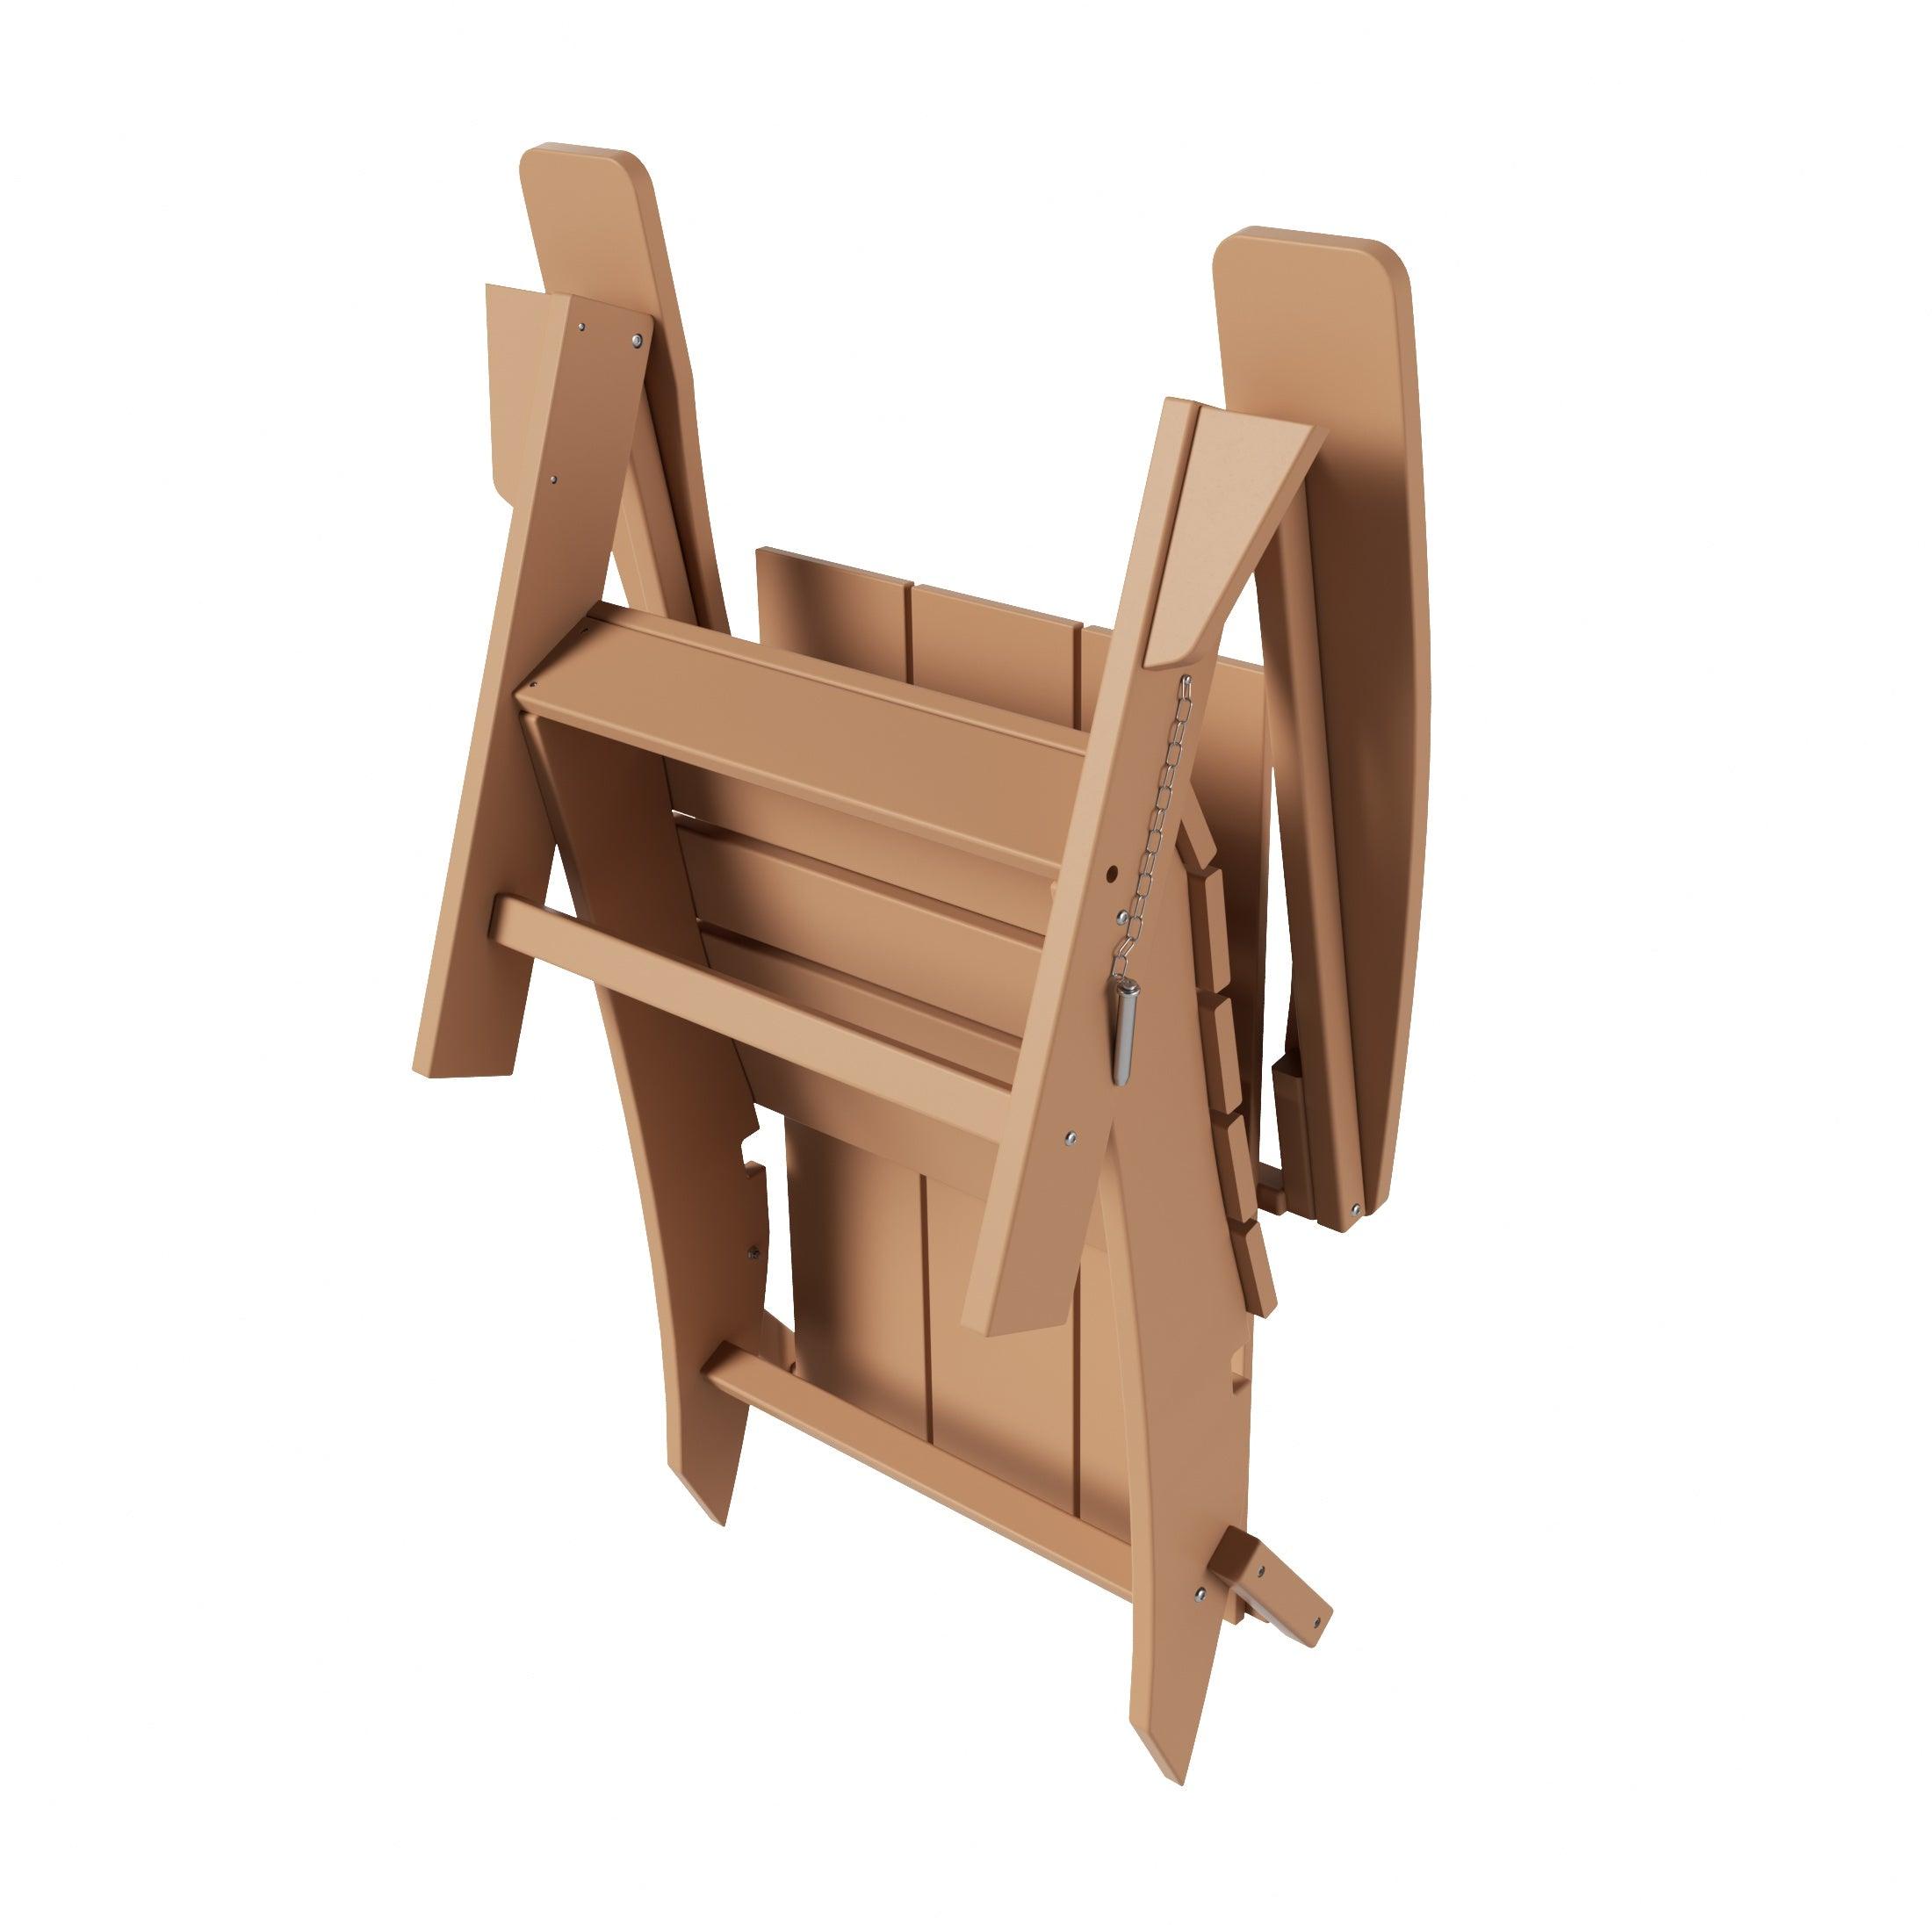 Palms Modern Folding Poly Adirondack Chair (Set of 4) - Costaelm